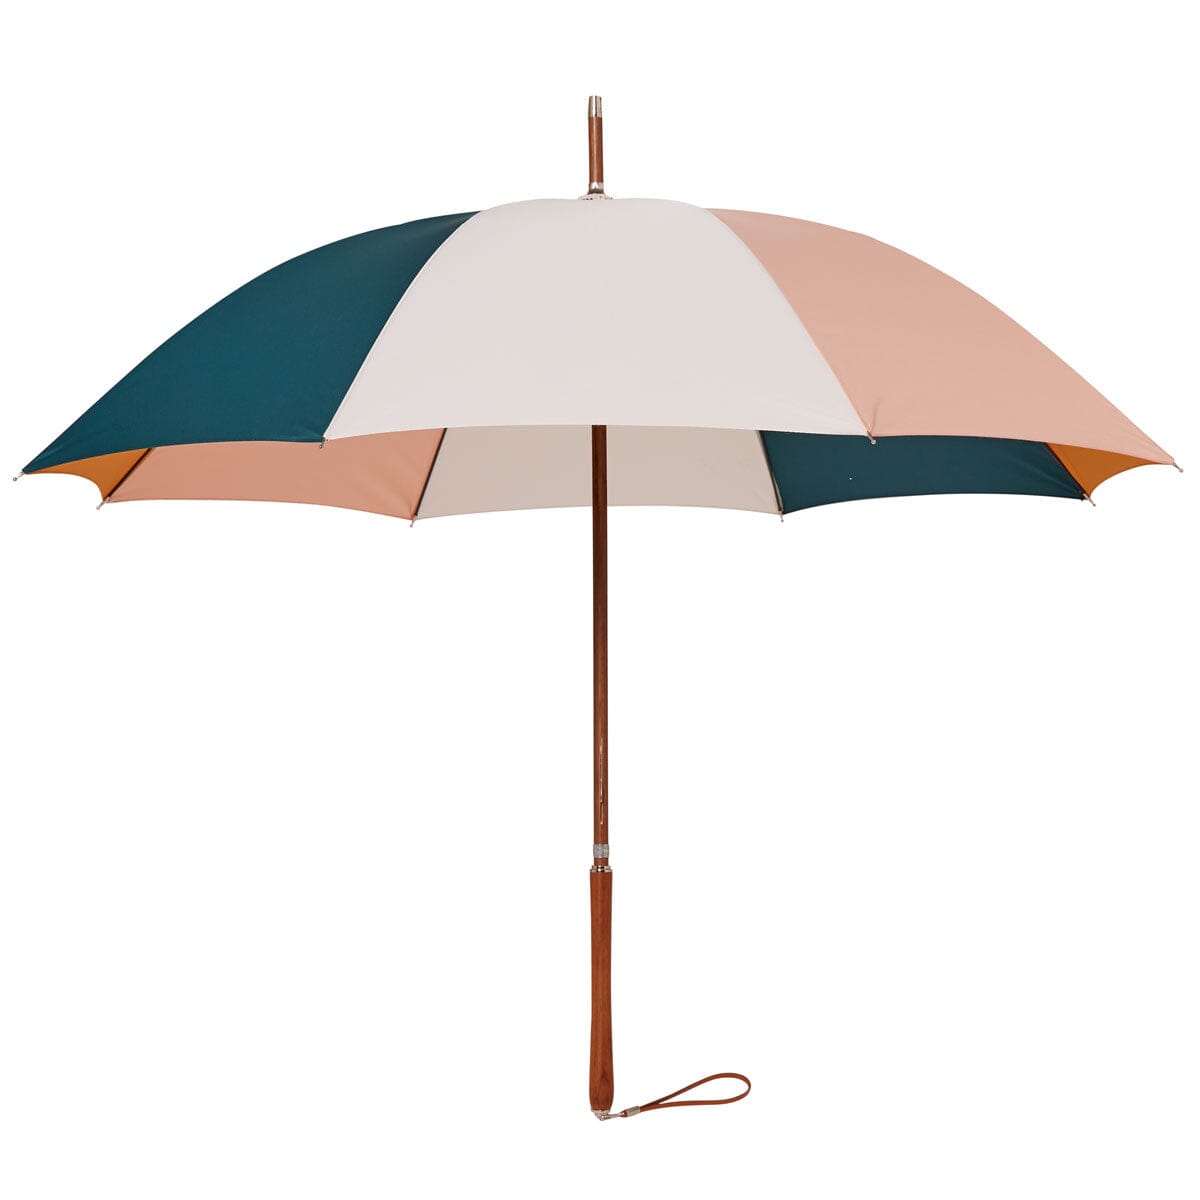 The Rain Umbrella - 70's Cinque